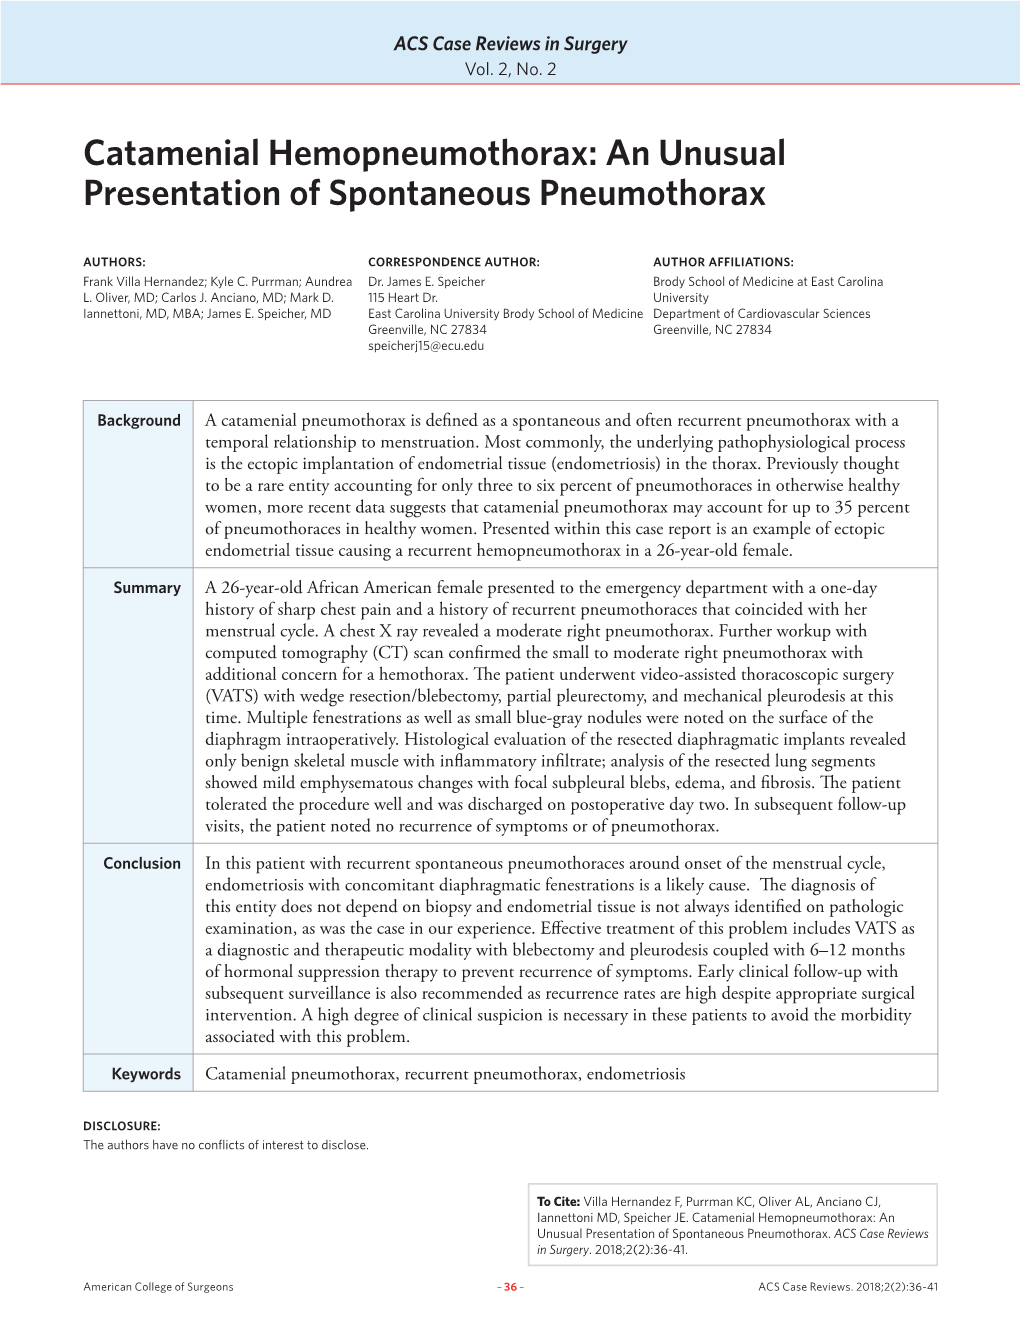 Catamenial Hemopneumothorax: an Unusual Presentation of Spontaneous Pneumothorax